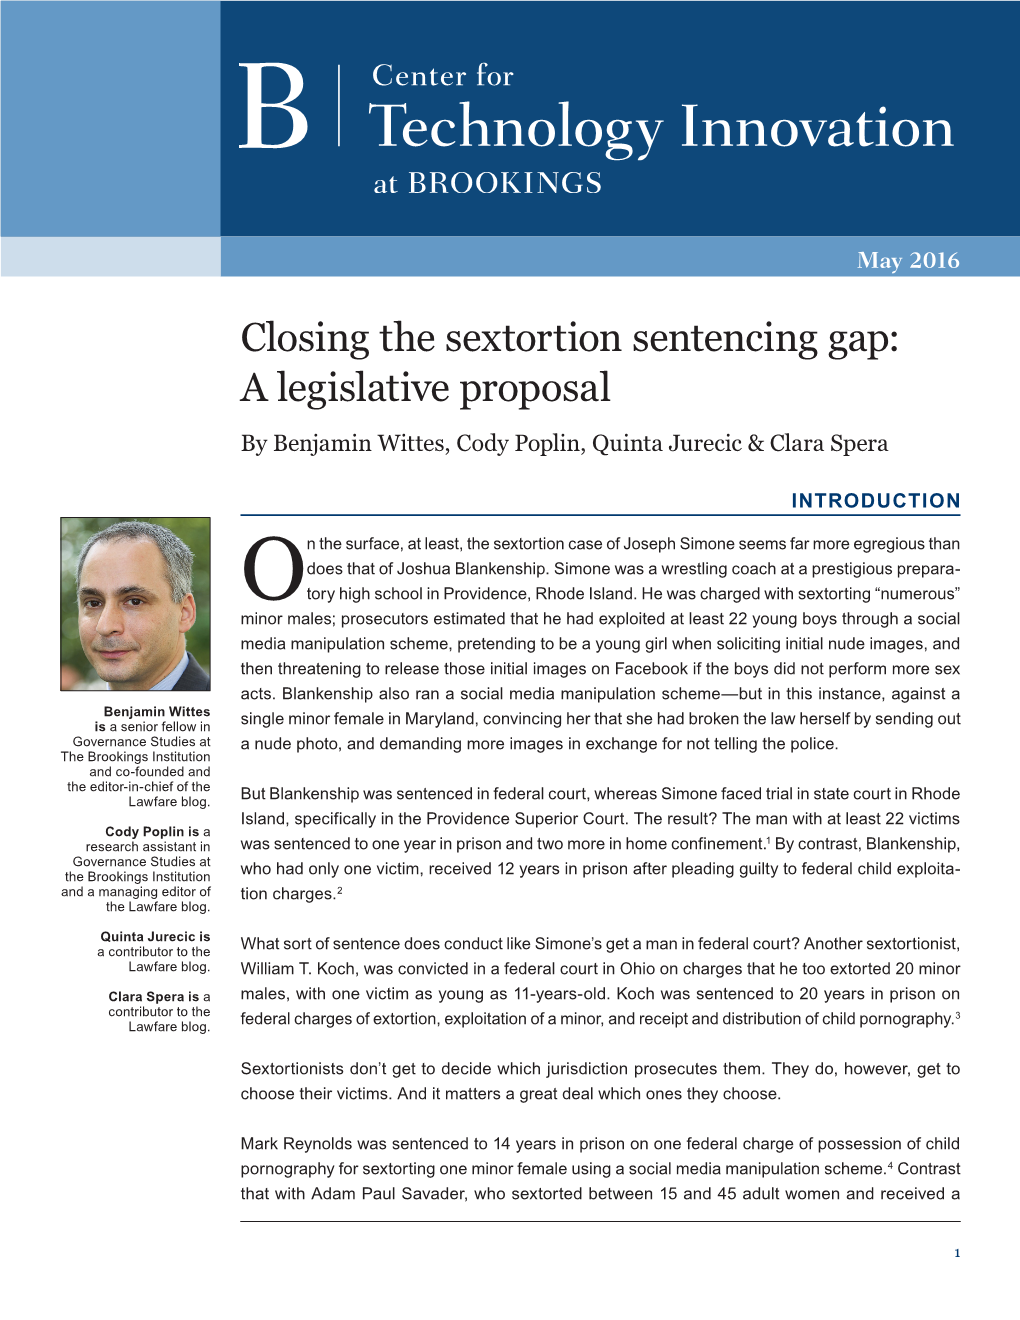 Closing the Sextortion Sentencing Gap: a Legislative Proposal by Benjamin Wittes, Cody Poplin, Quinta Jurecic & Clara Spera